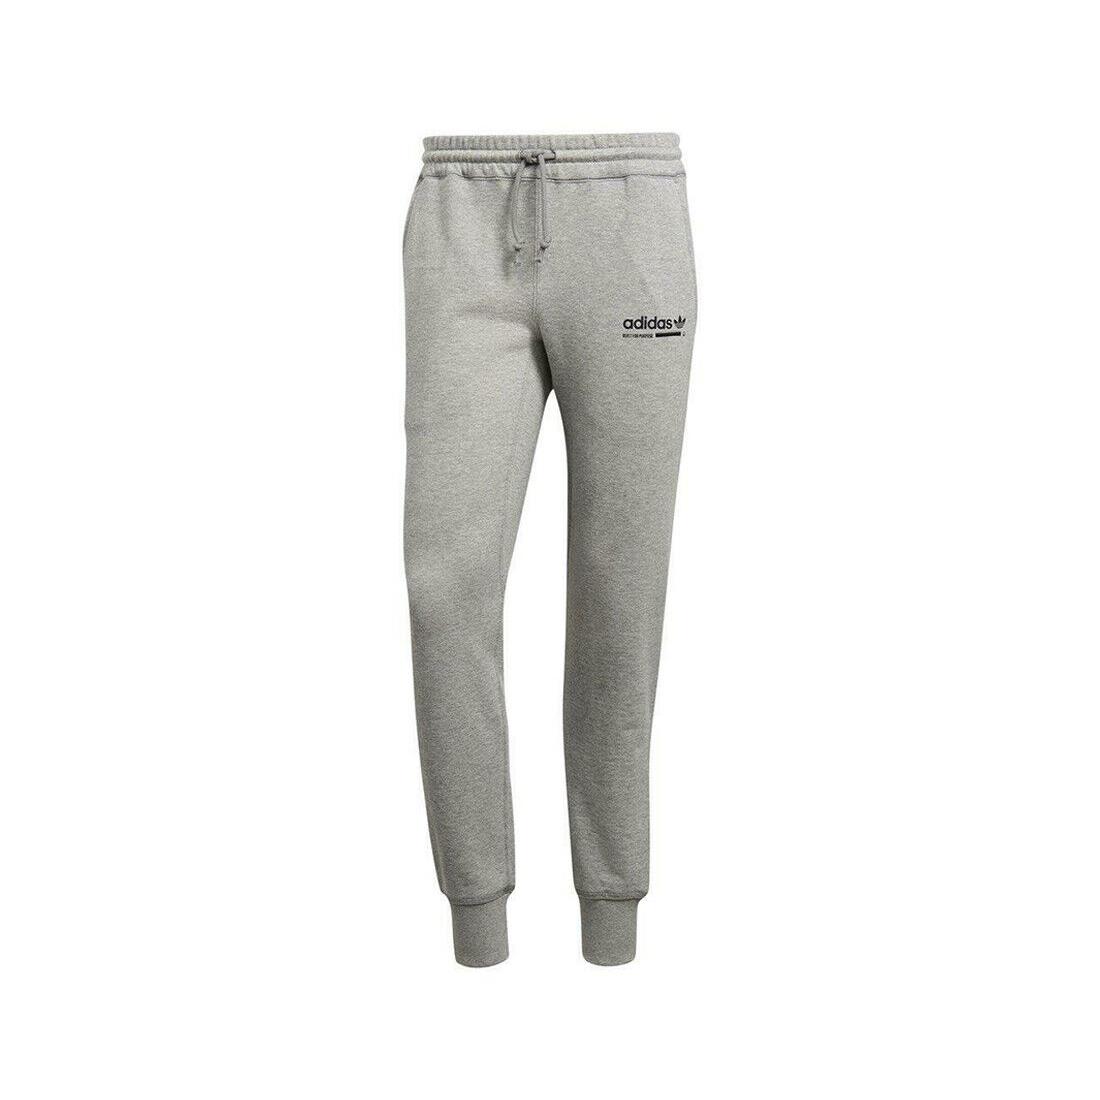 Adidas Kaval Mens Active Pants Size L Color: Medium Grey Heather